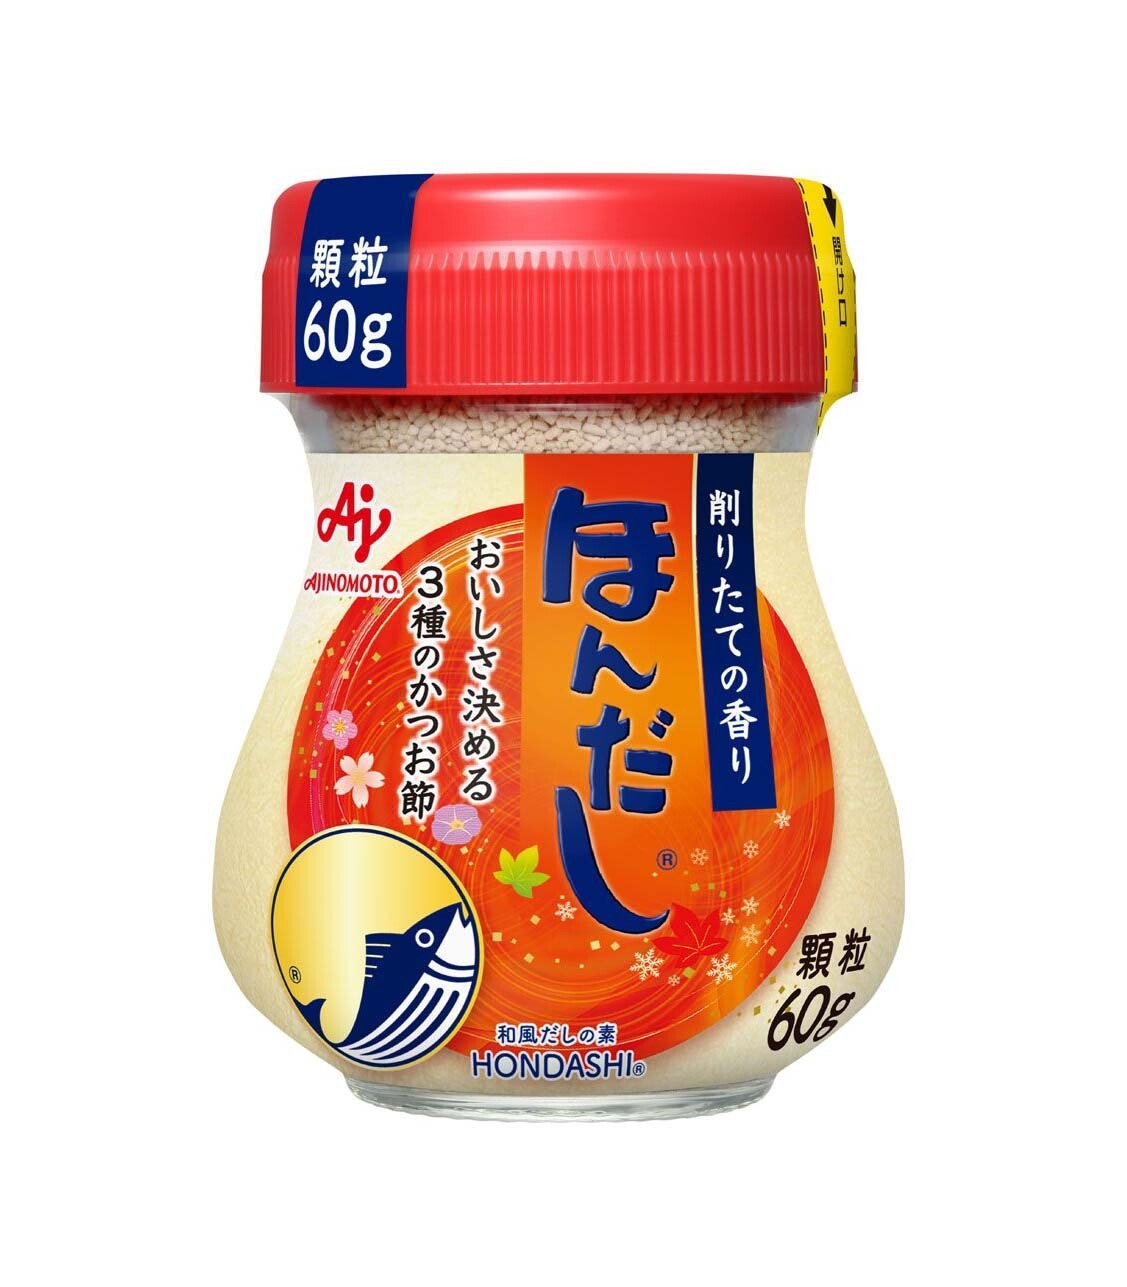 S0003 Hondashi Bonito Stock Powder 60g, AJINOMOTO